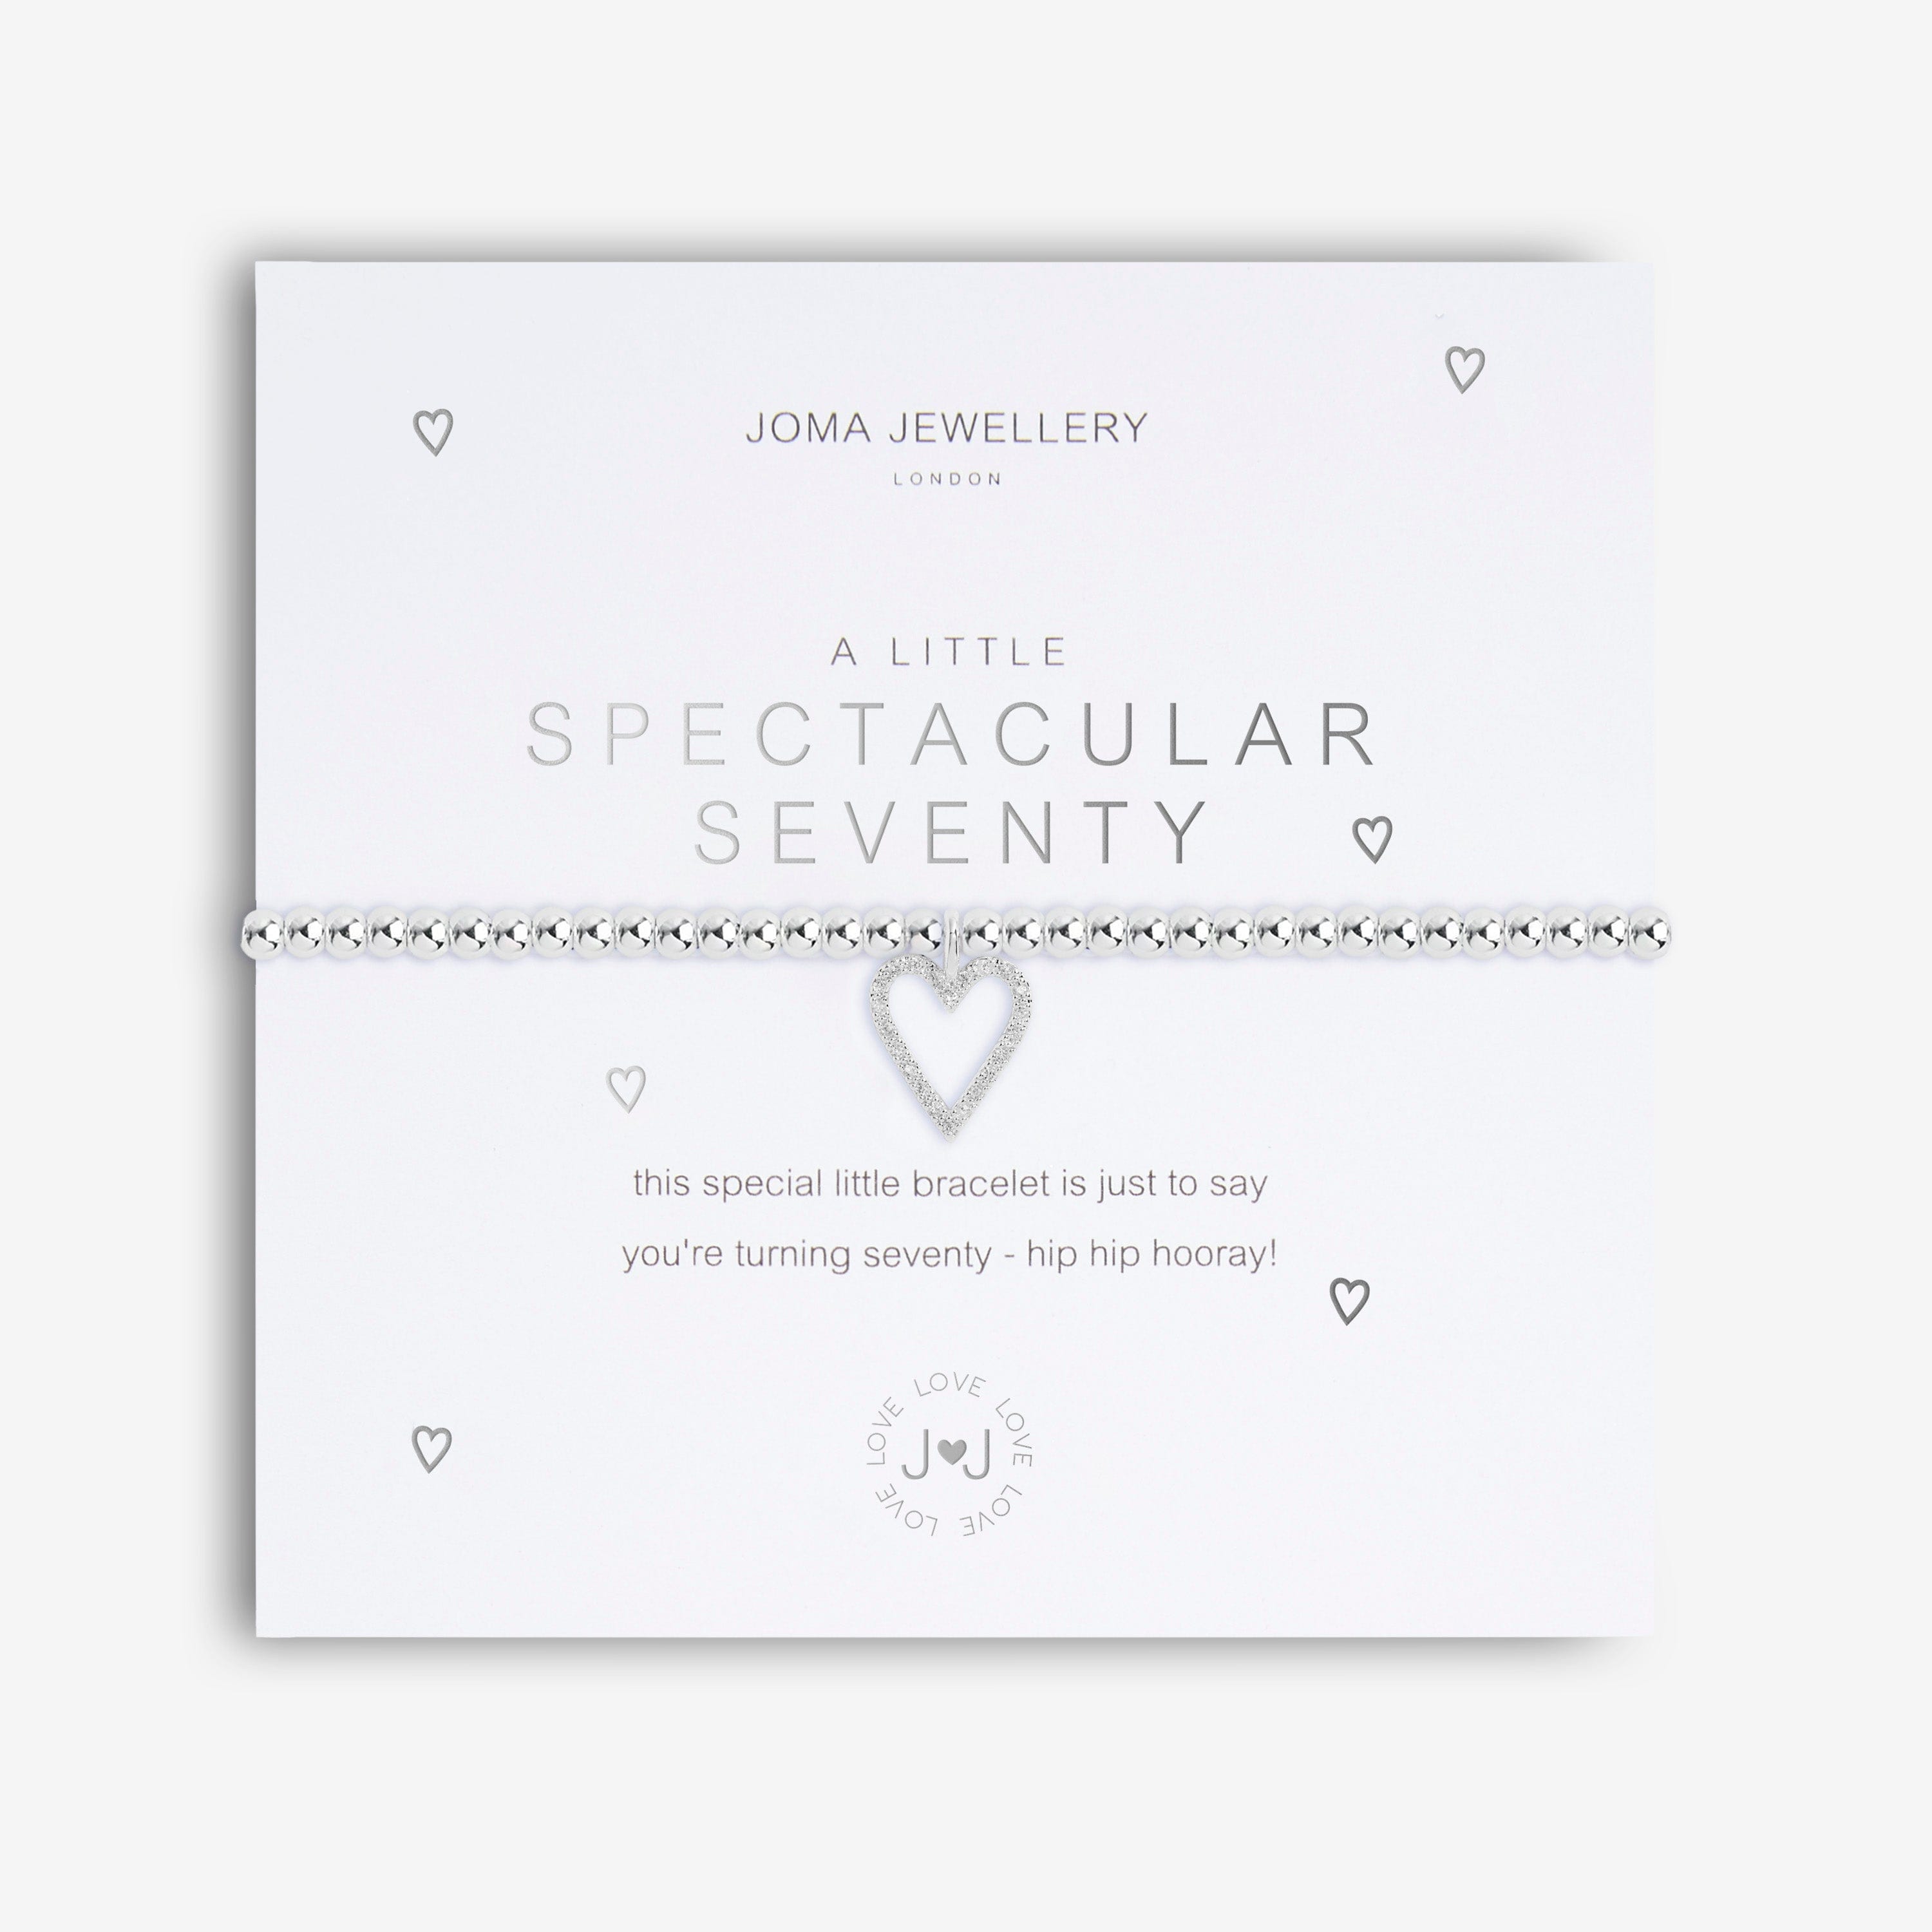 Joma Jewellery Bracelet Joma Jewellery Bracelet - A Little Spectacular Seventy